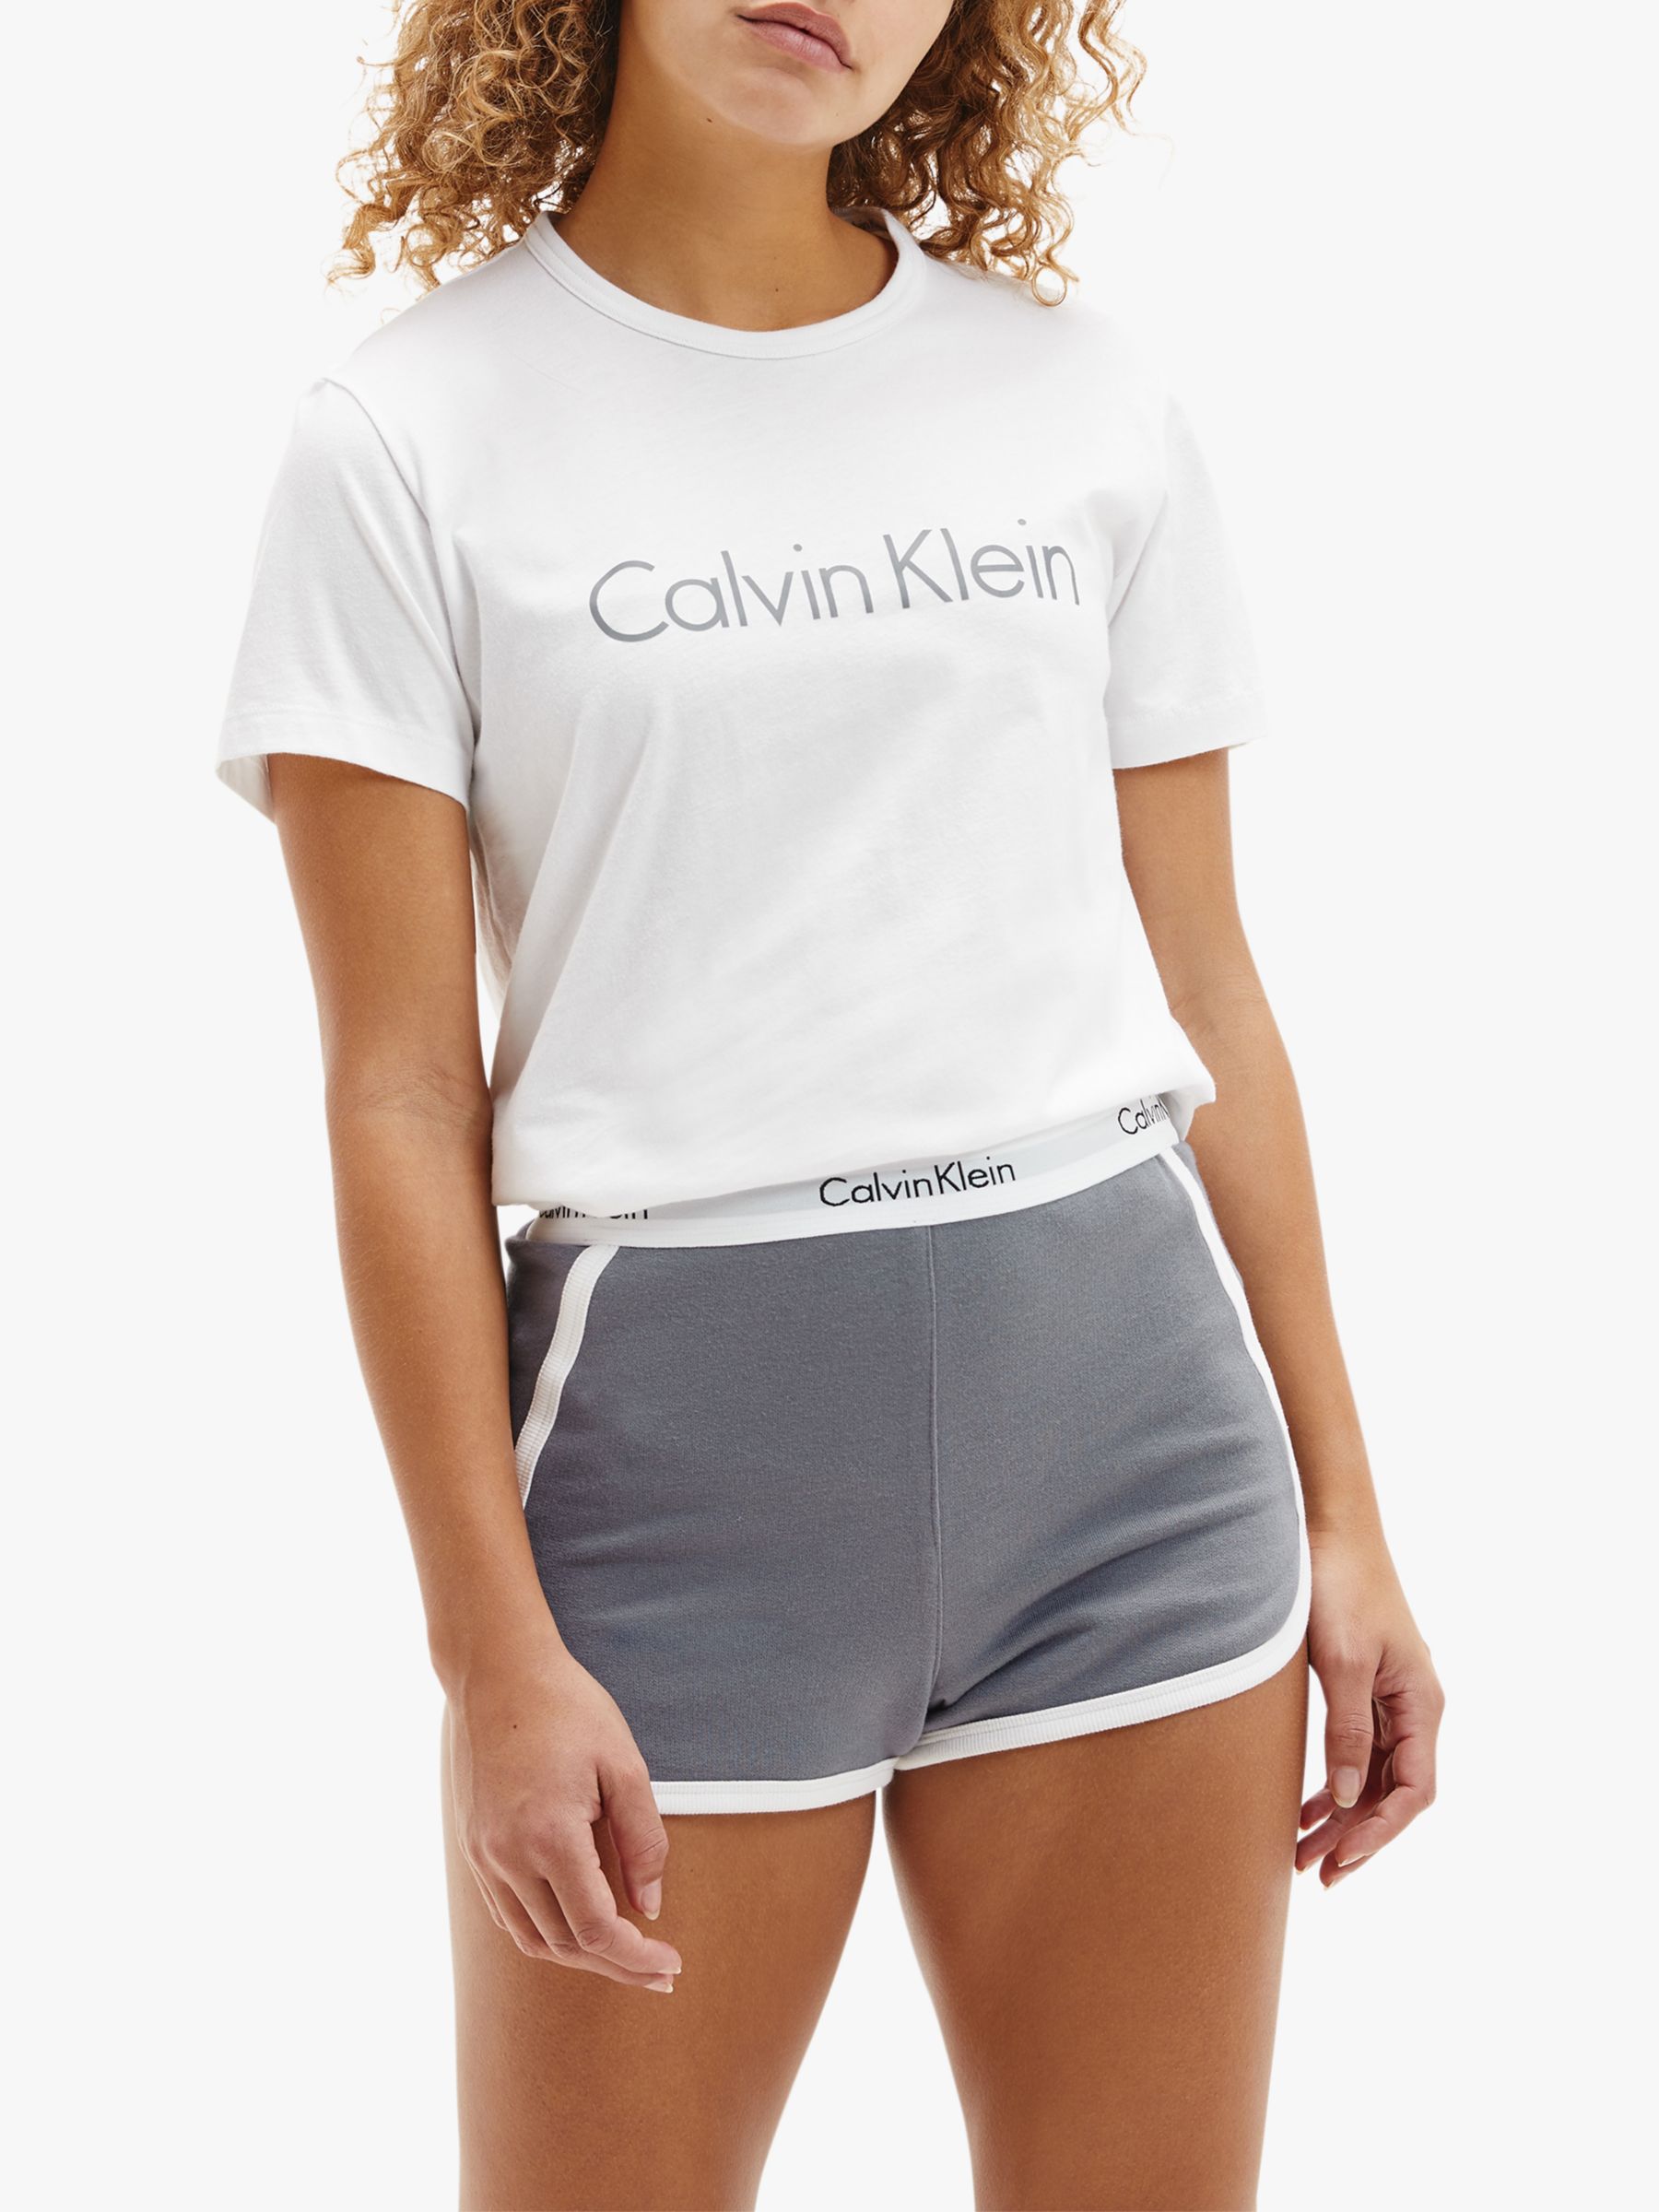 Calvin Klein Modern Cotton Logo Shorts Pyjama Set, White/Pewter